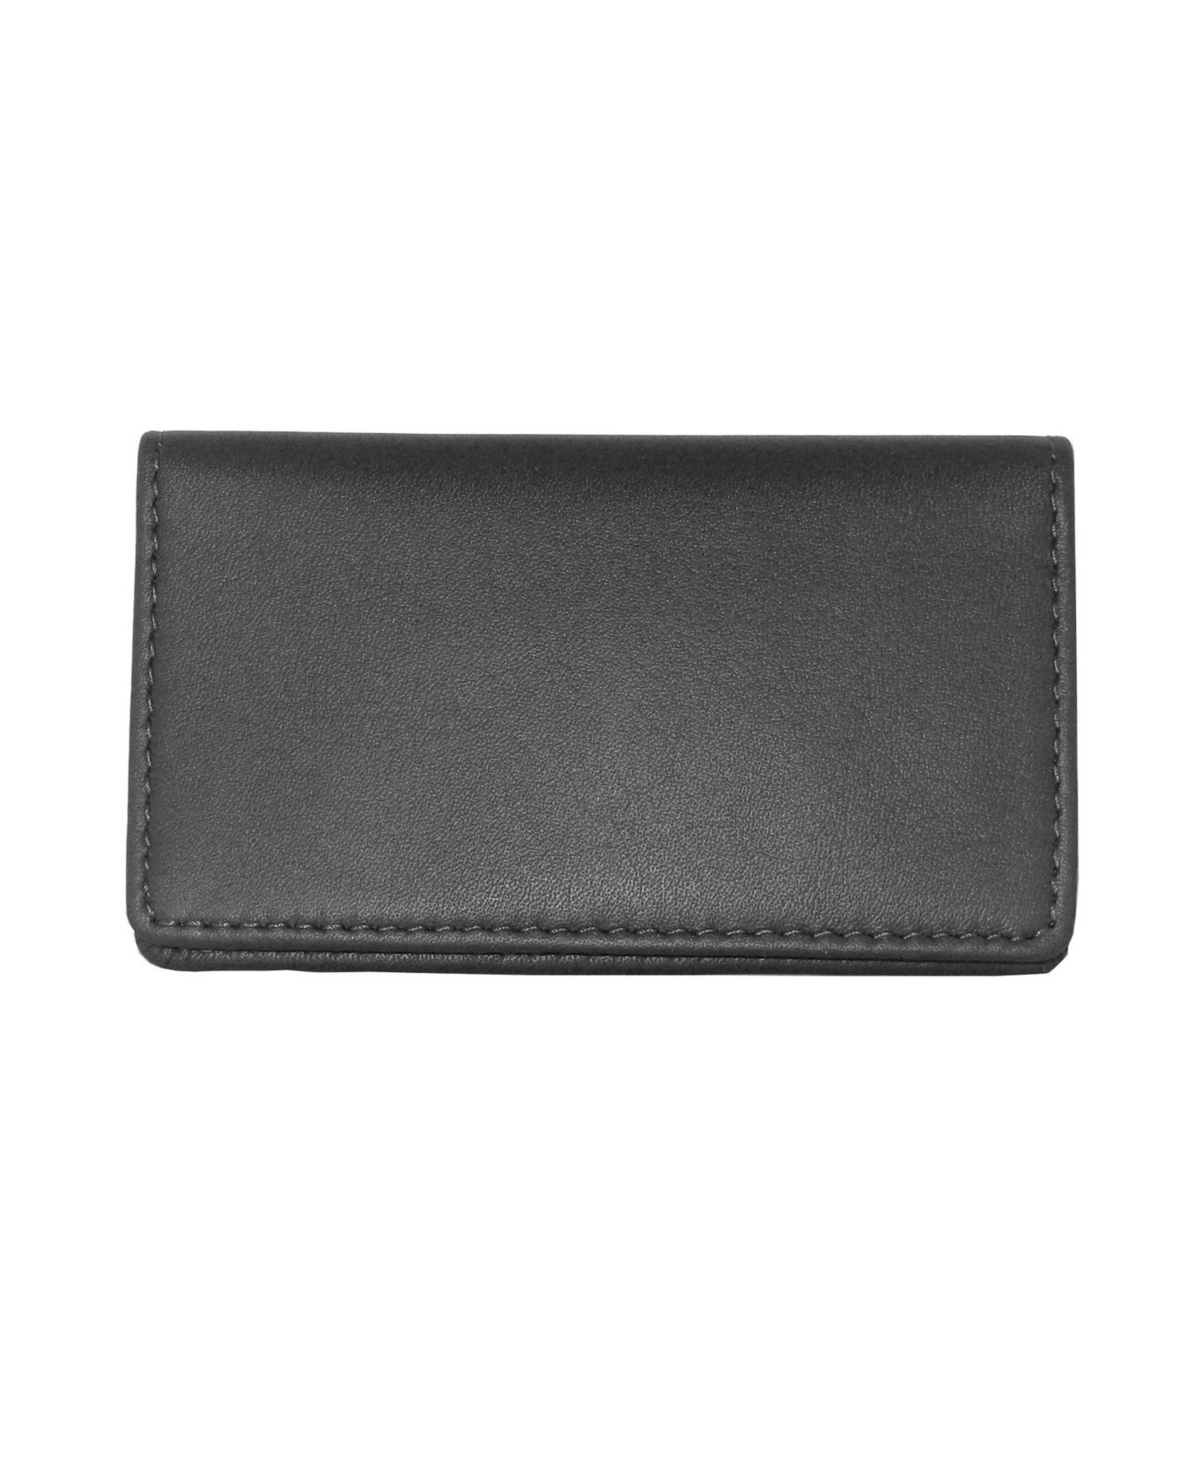 Royce Slim Business Card Case in Genuine Leather - Black